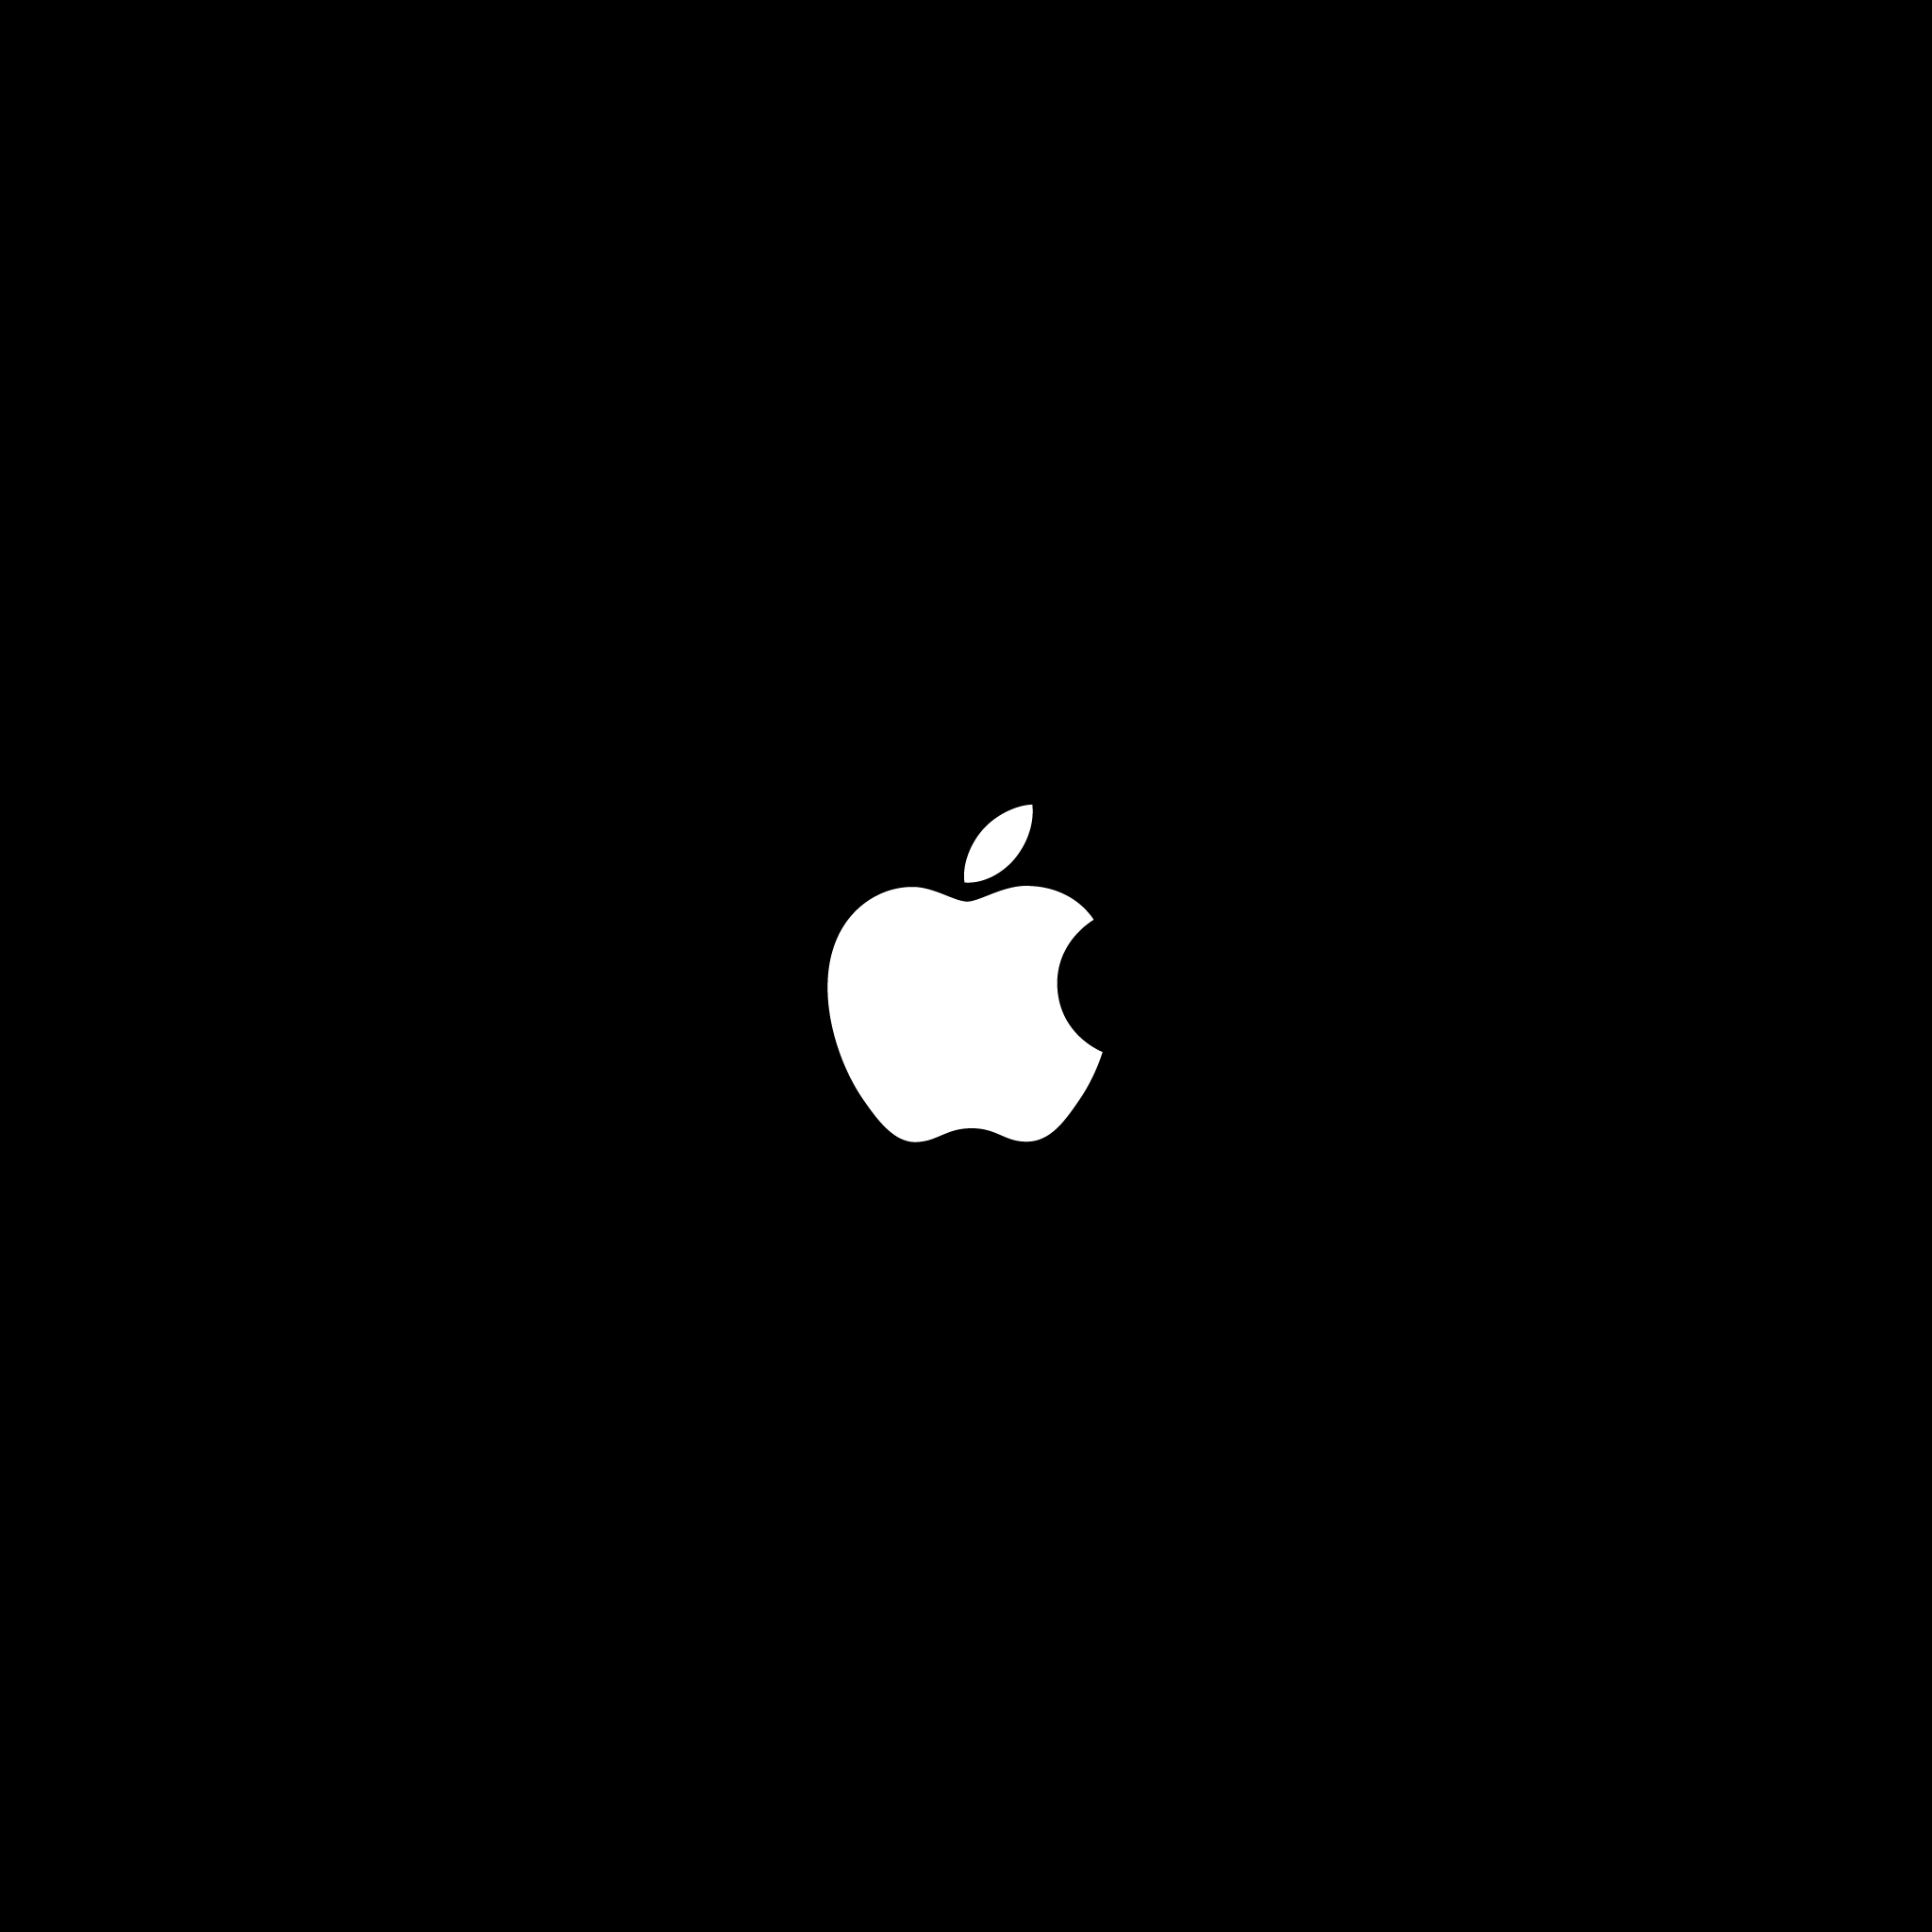 Small Apple Logos